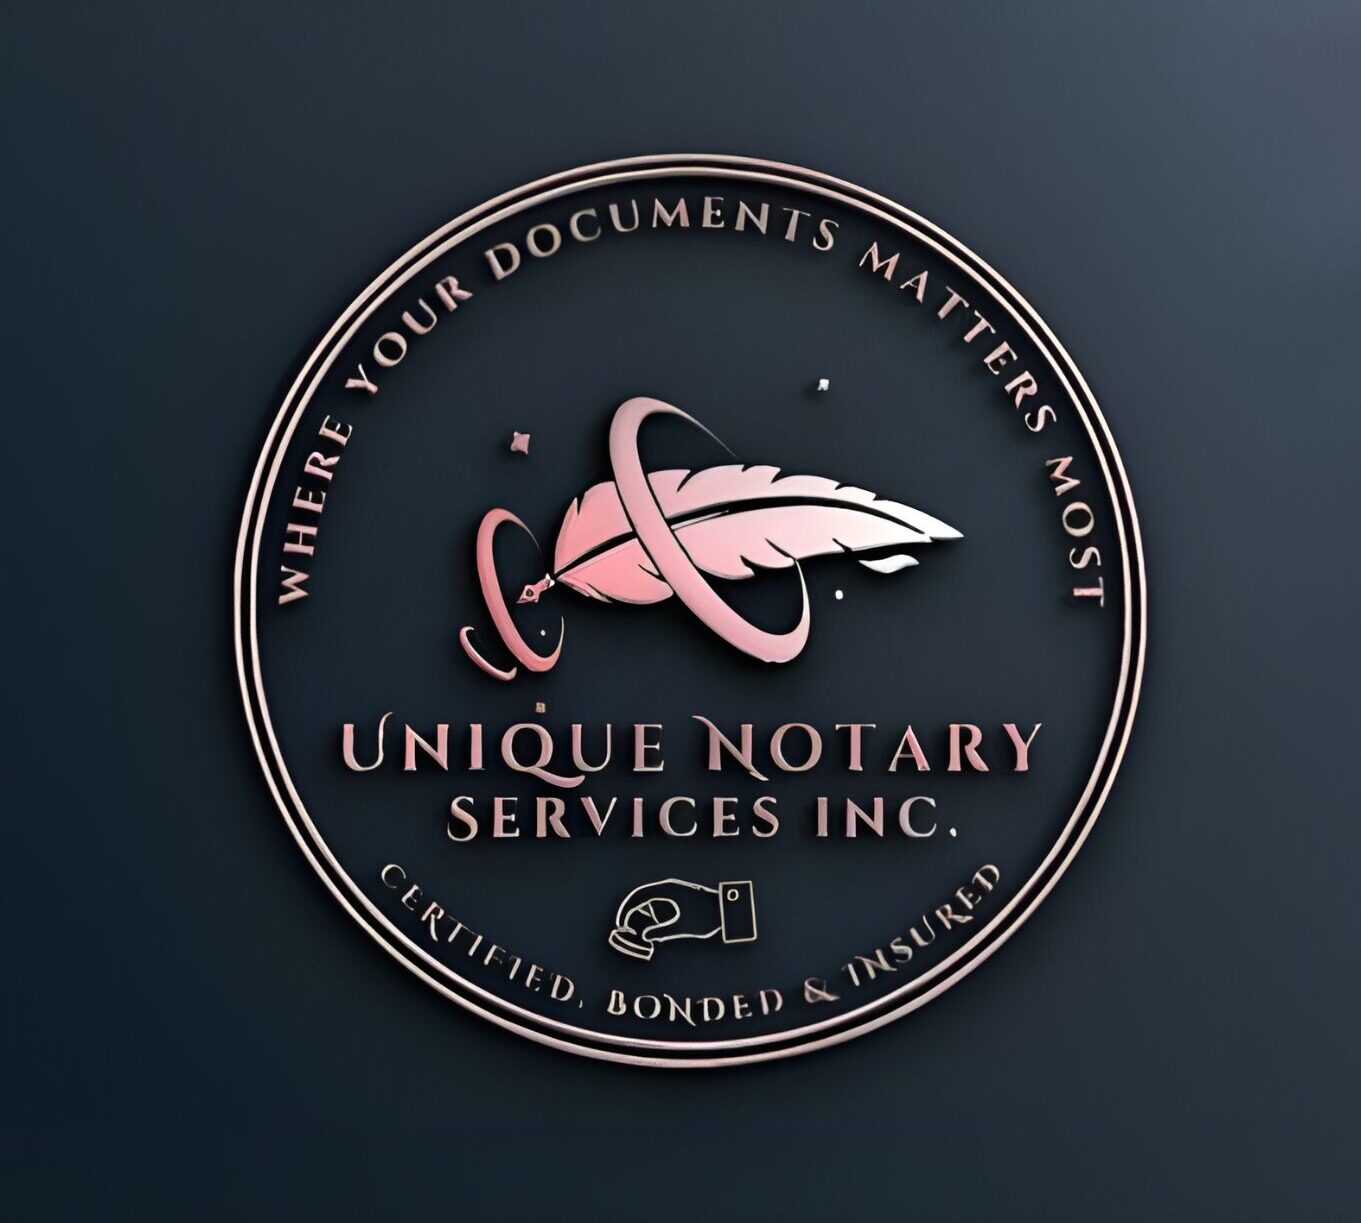 Unique Notary Services INC